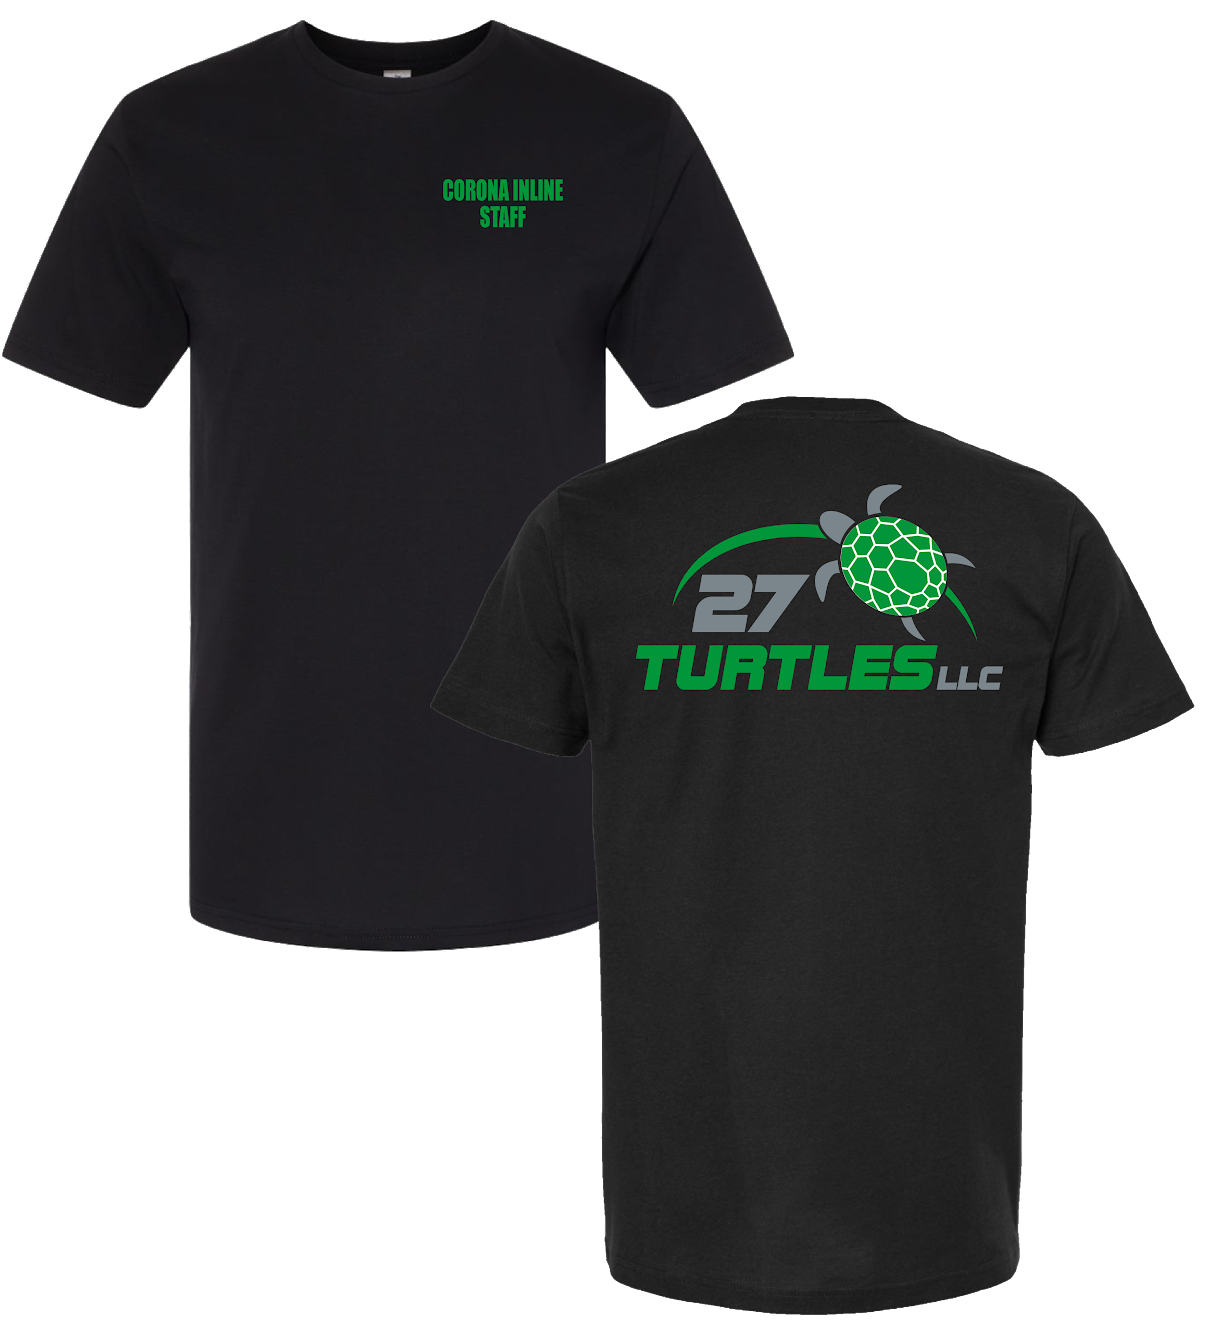 27 Turtles Tee - Gildan 2000